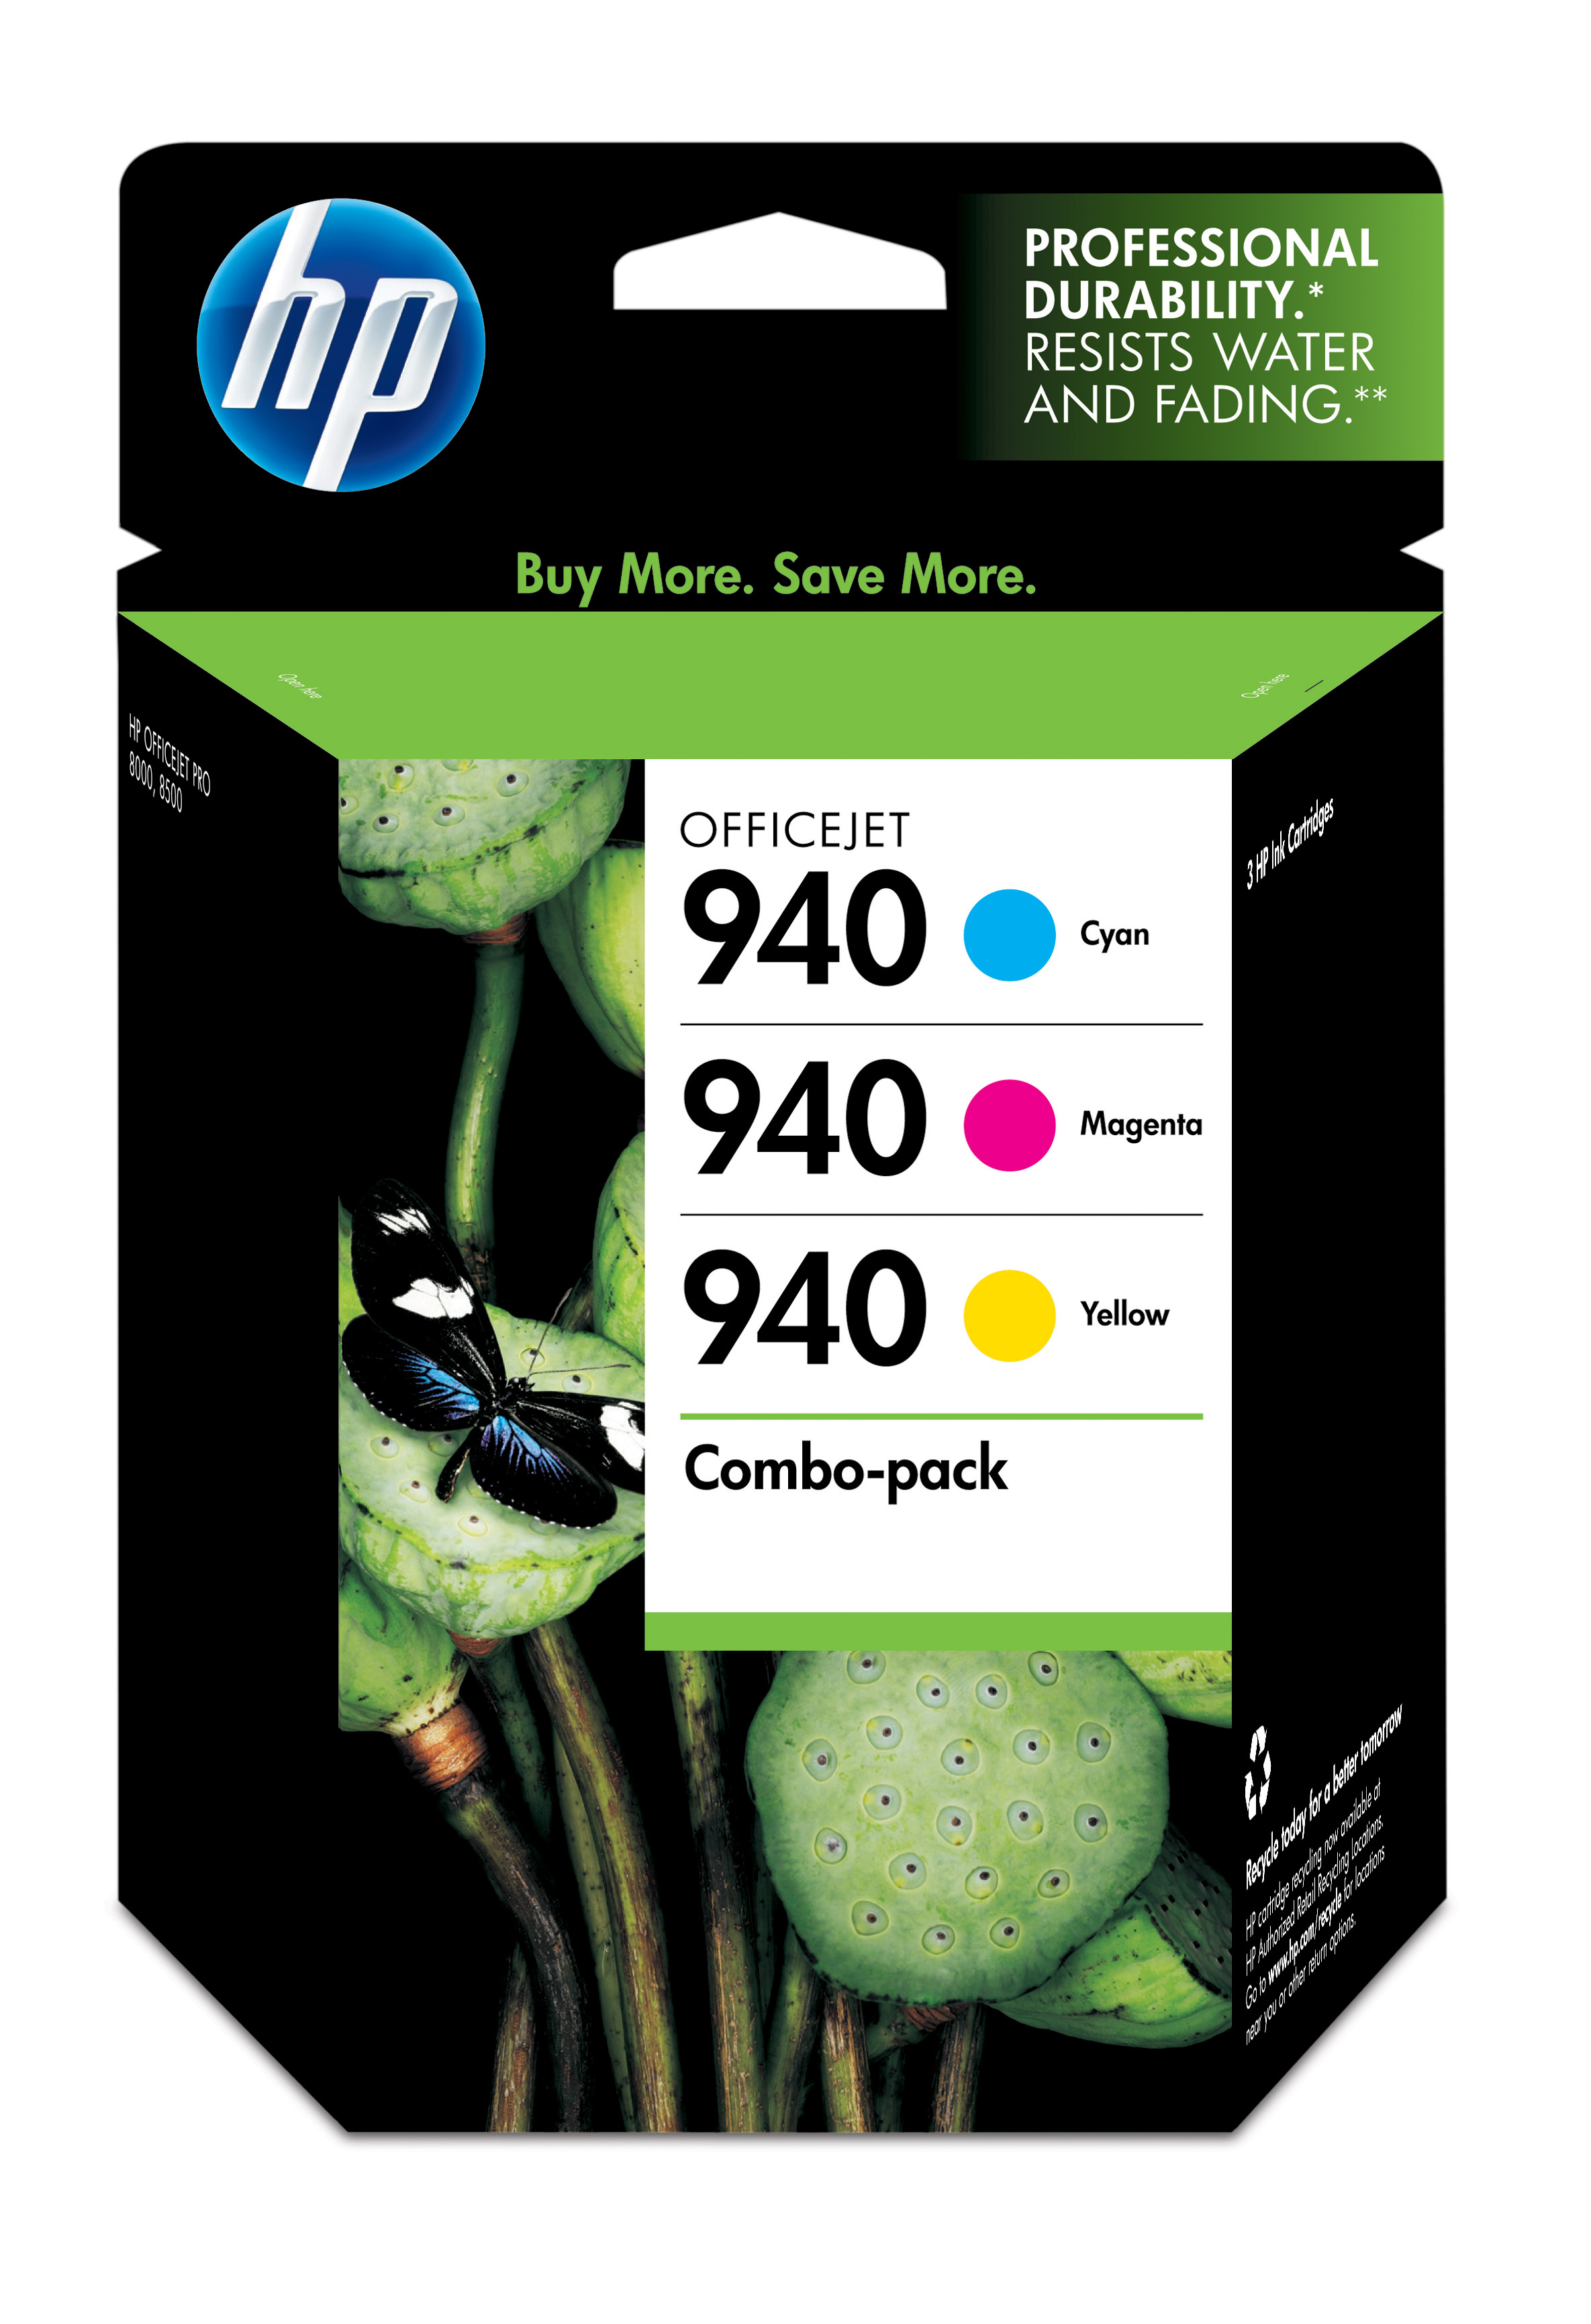 HP 940 Combo-pack Cyan/Magenta/Yellow Officejet Ink Cartridges Genuine HP Inkjet